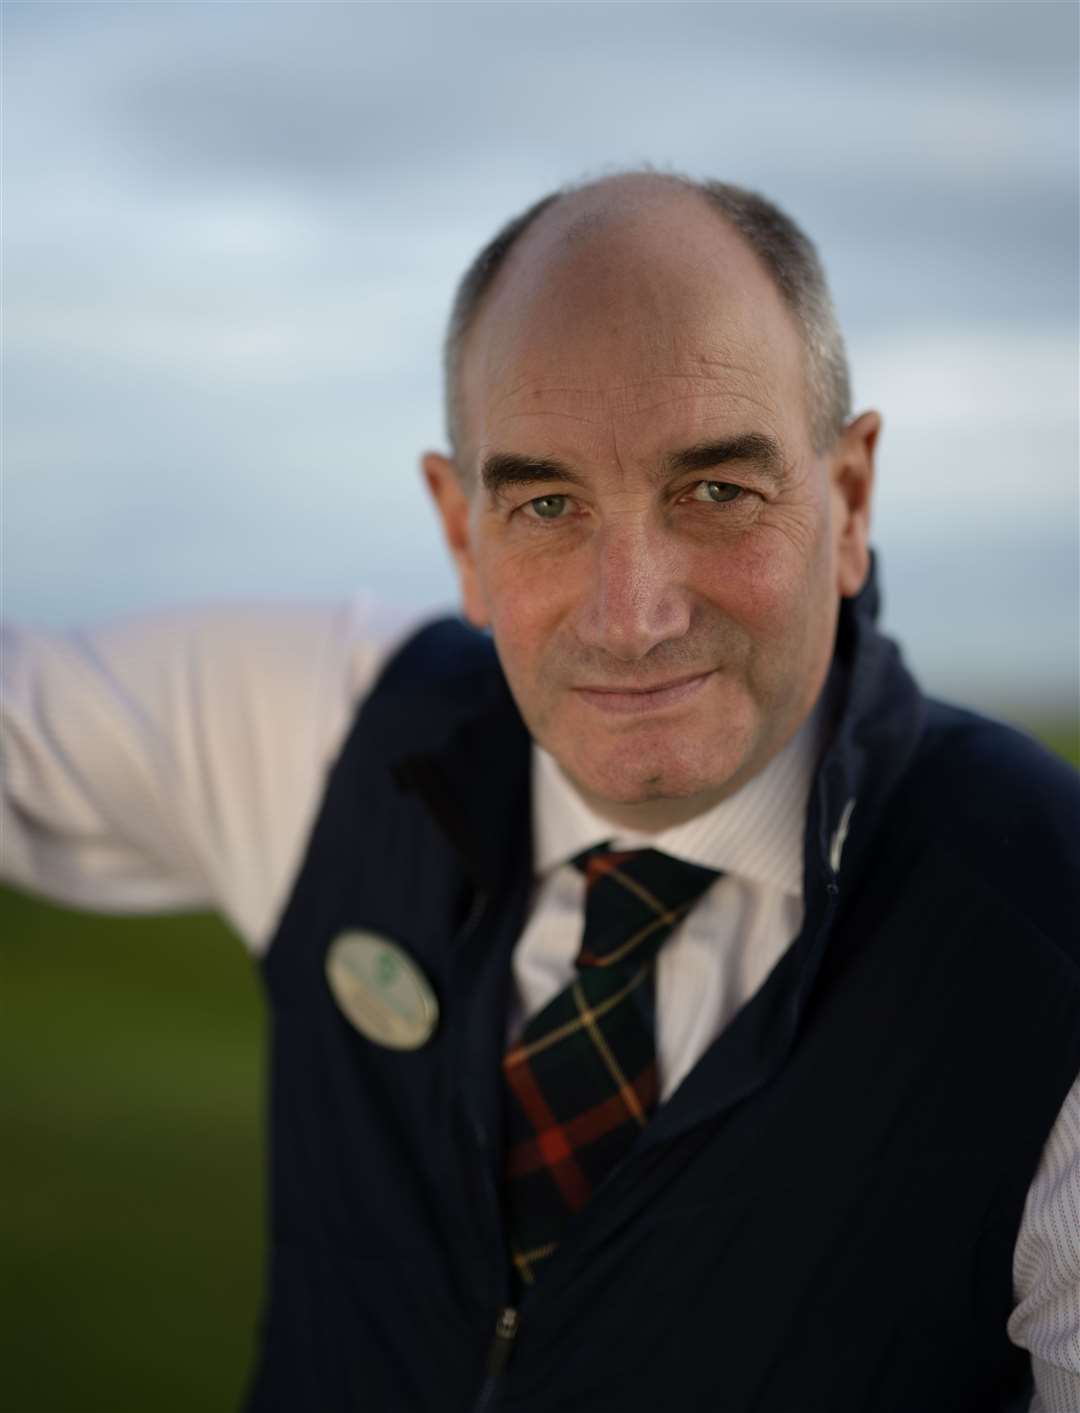 Royal Dornoch Golf Club general manager Neil Hampton. Photo: Matthew Harris golf collection